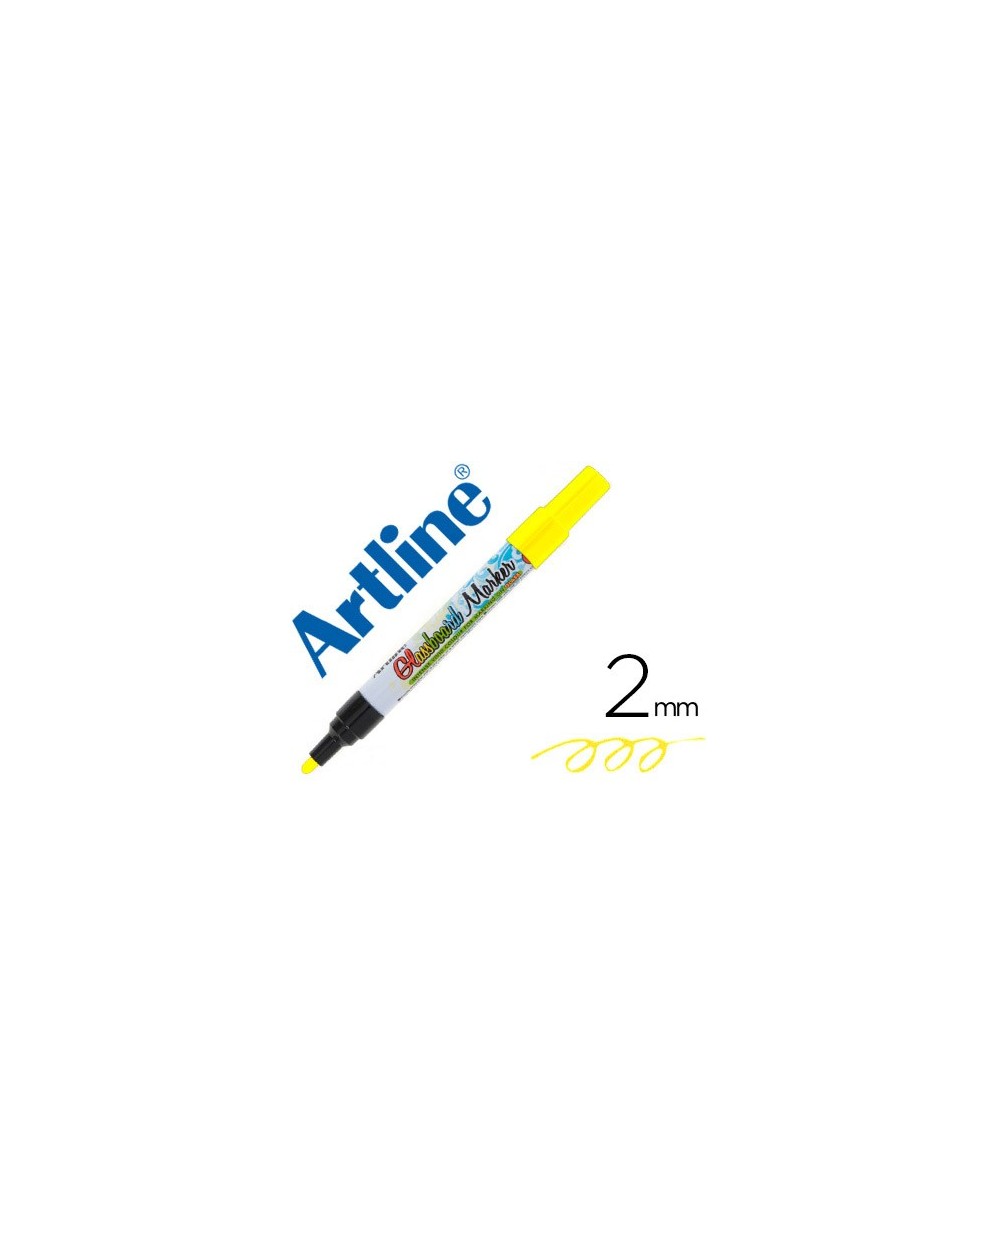 Rotulador artline glass marker especial cristal borrable en seco o humedo color amarillo fluor